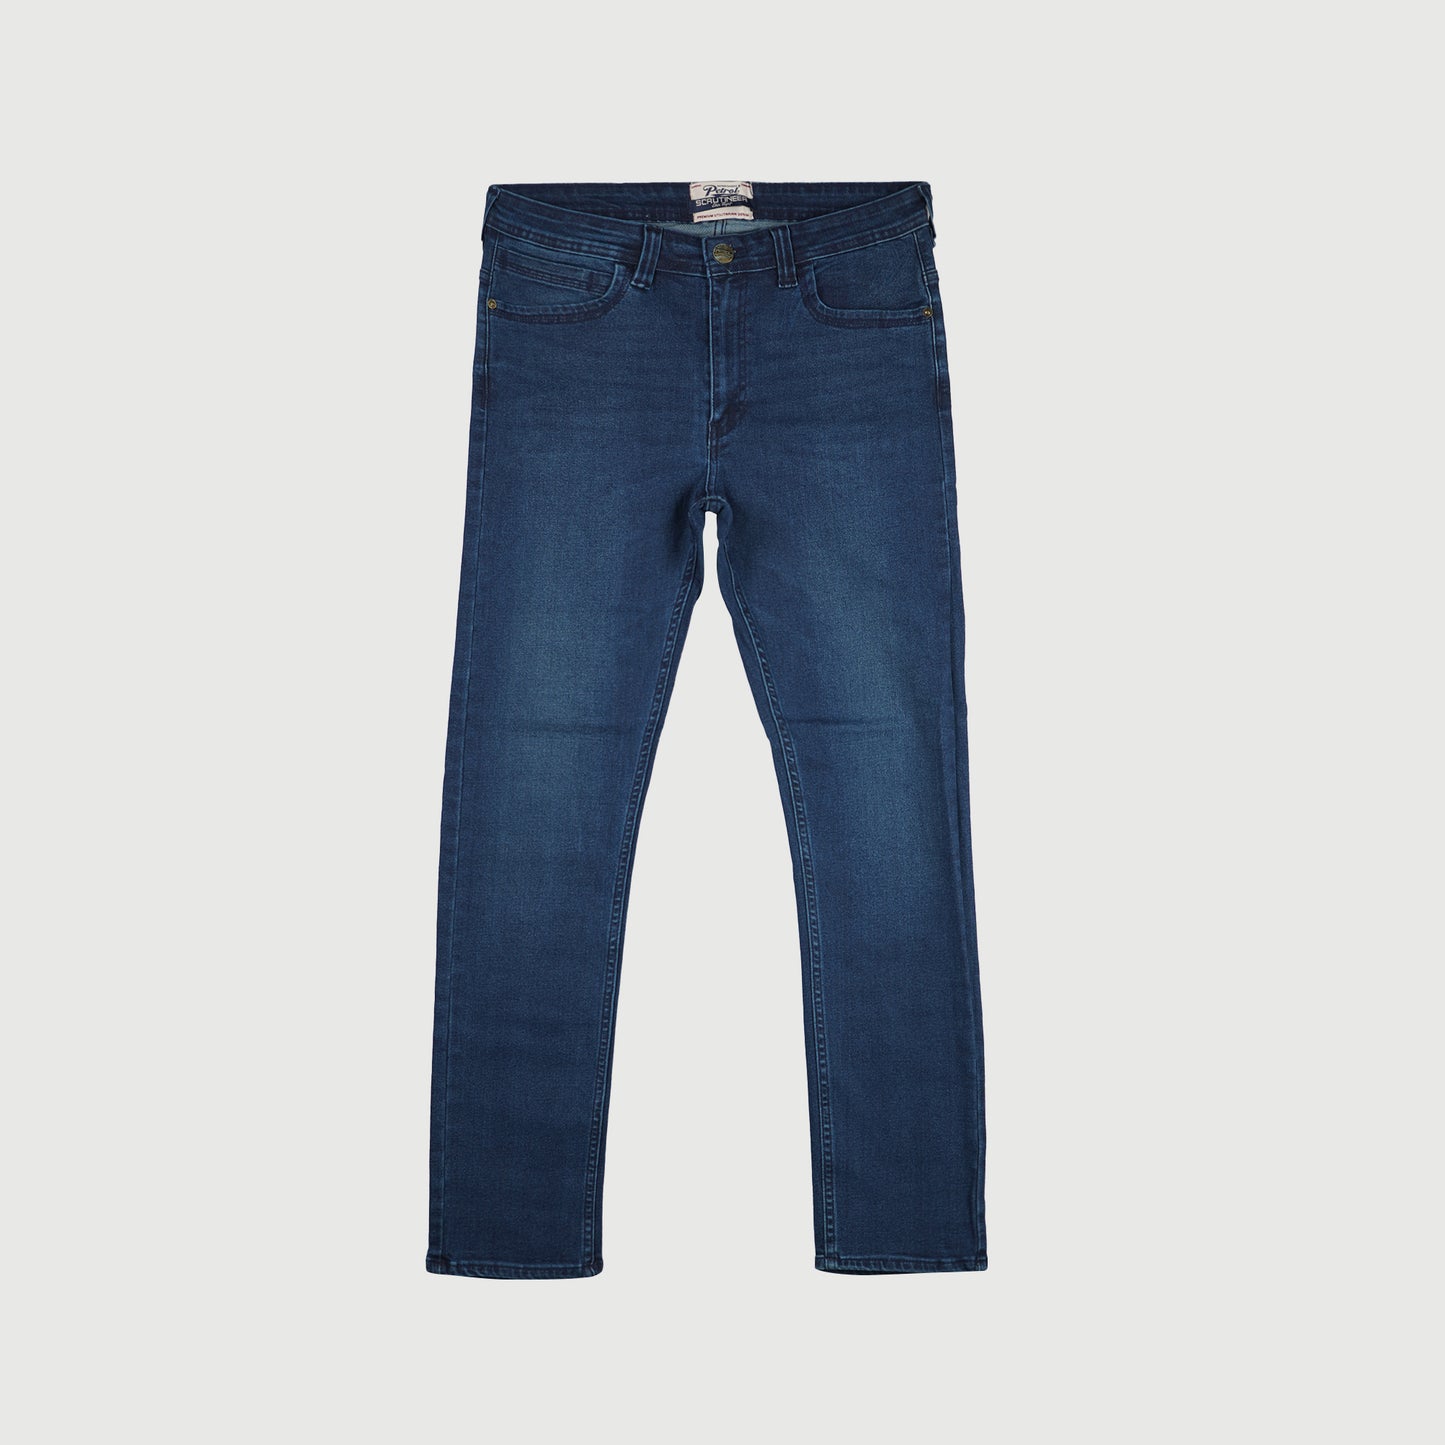 Petrol Basic Denim Pants for Men Skin Tight Fitting Mid Rise Trendy fashion Casual Bottoms Dark Shade Jeans for Men 149474-U (Dark Shade)